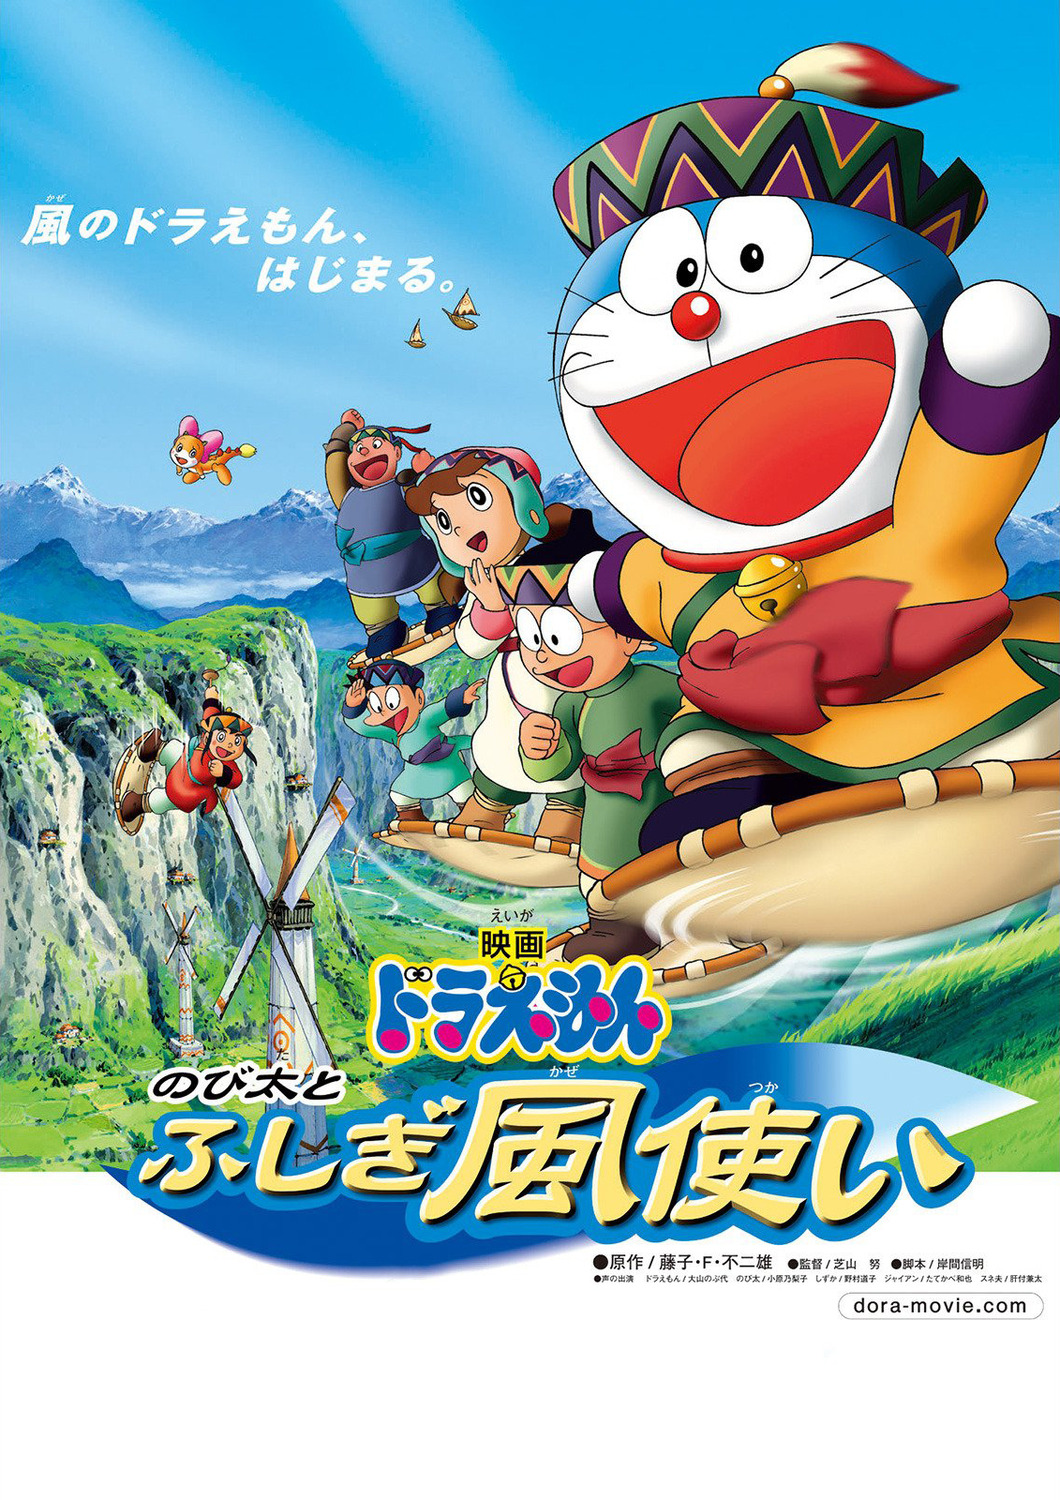 Extra Large Movie Poster Image for Doraemon: Nobita to fushigi kazetsukai 